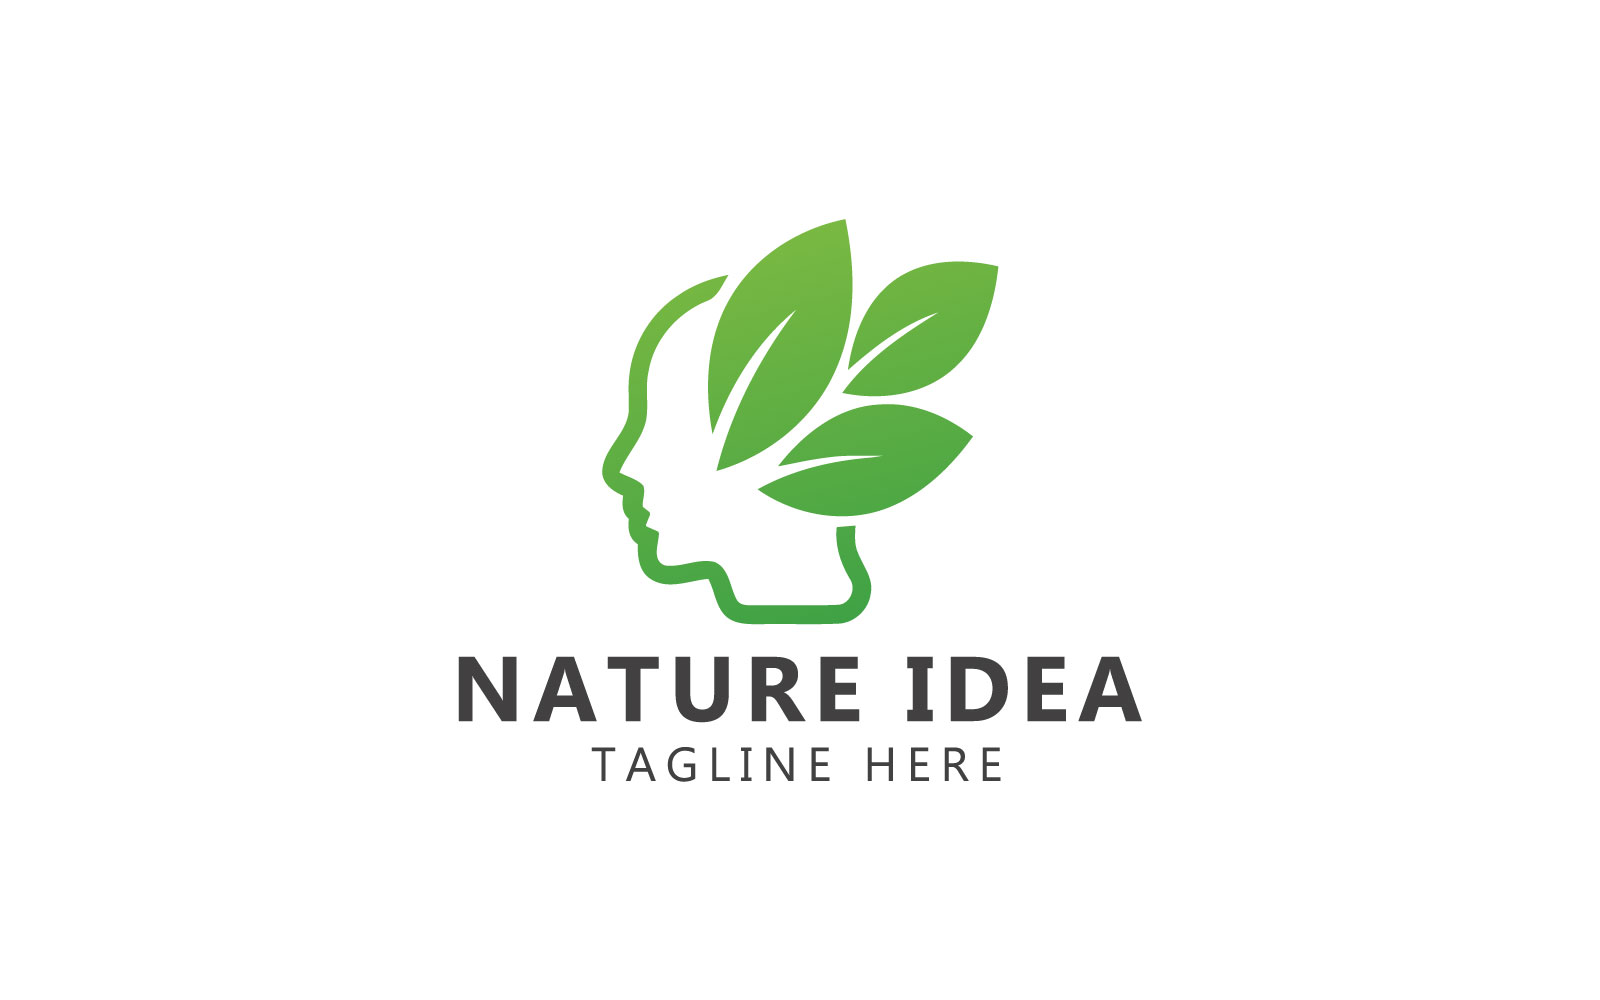 Green Idea Logo. Nature Idea Logo Template